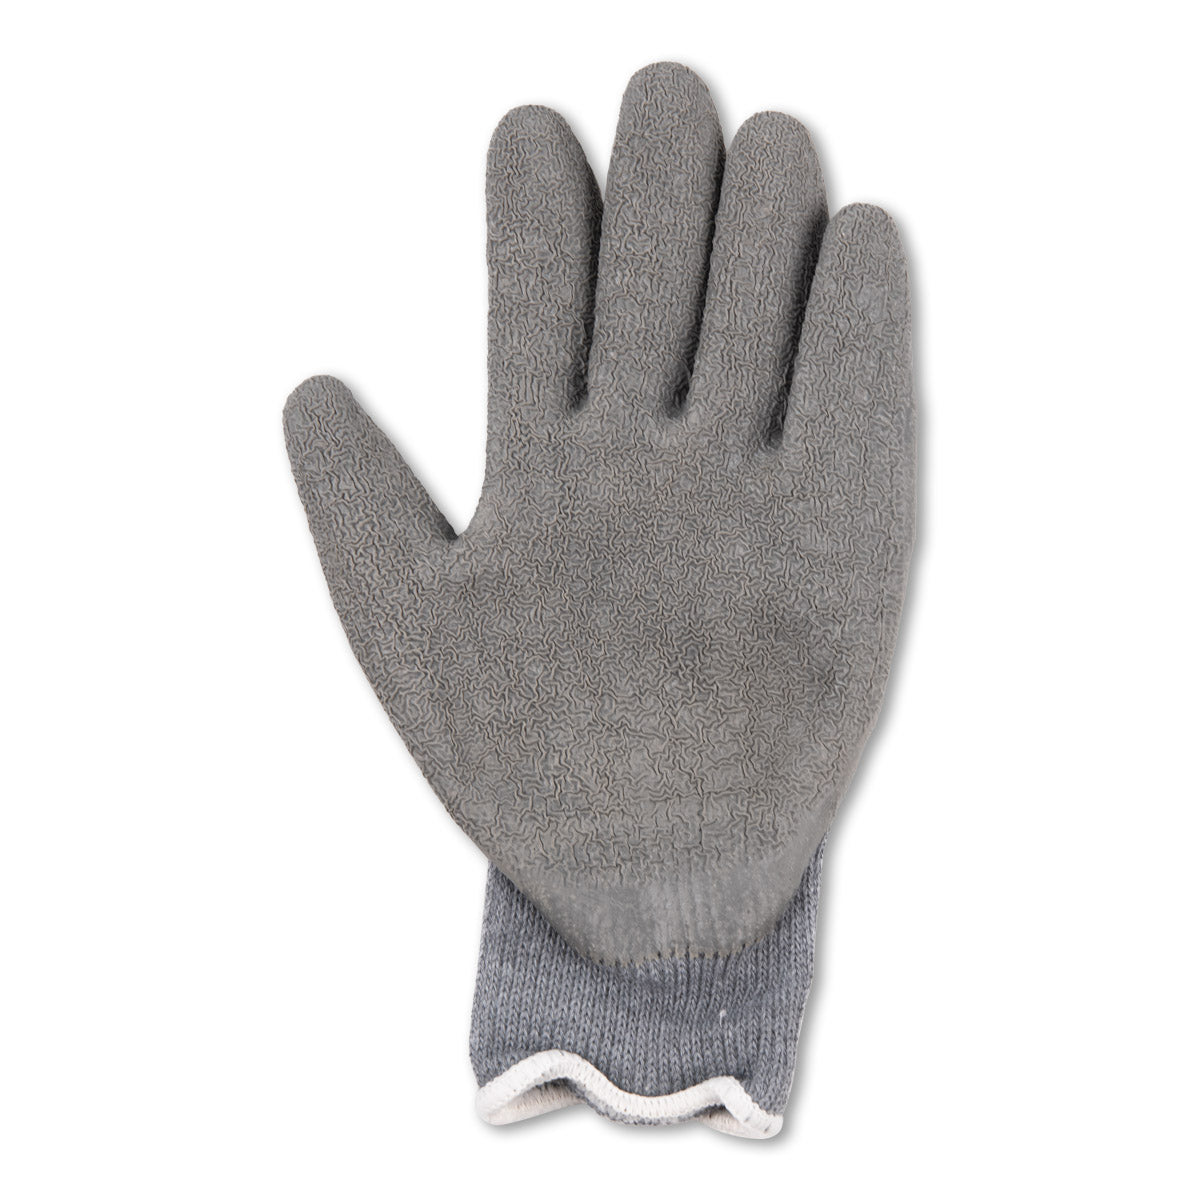 Mega-grip work gloves